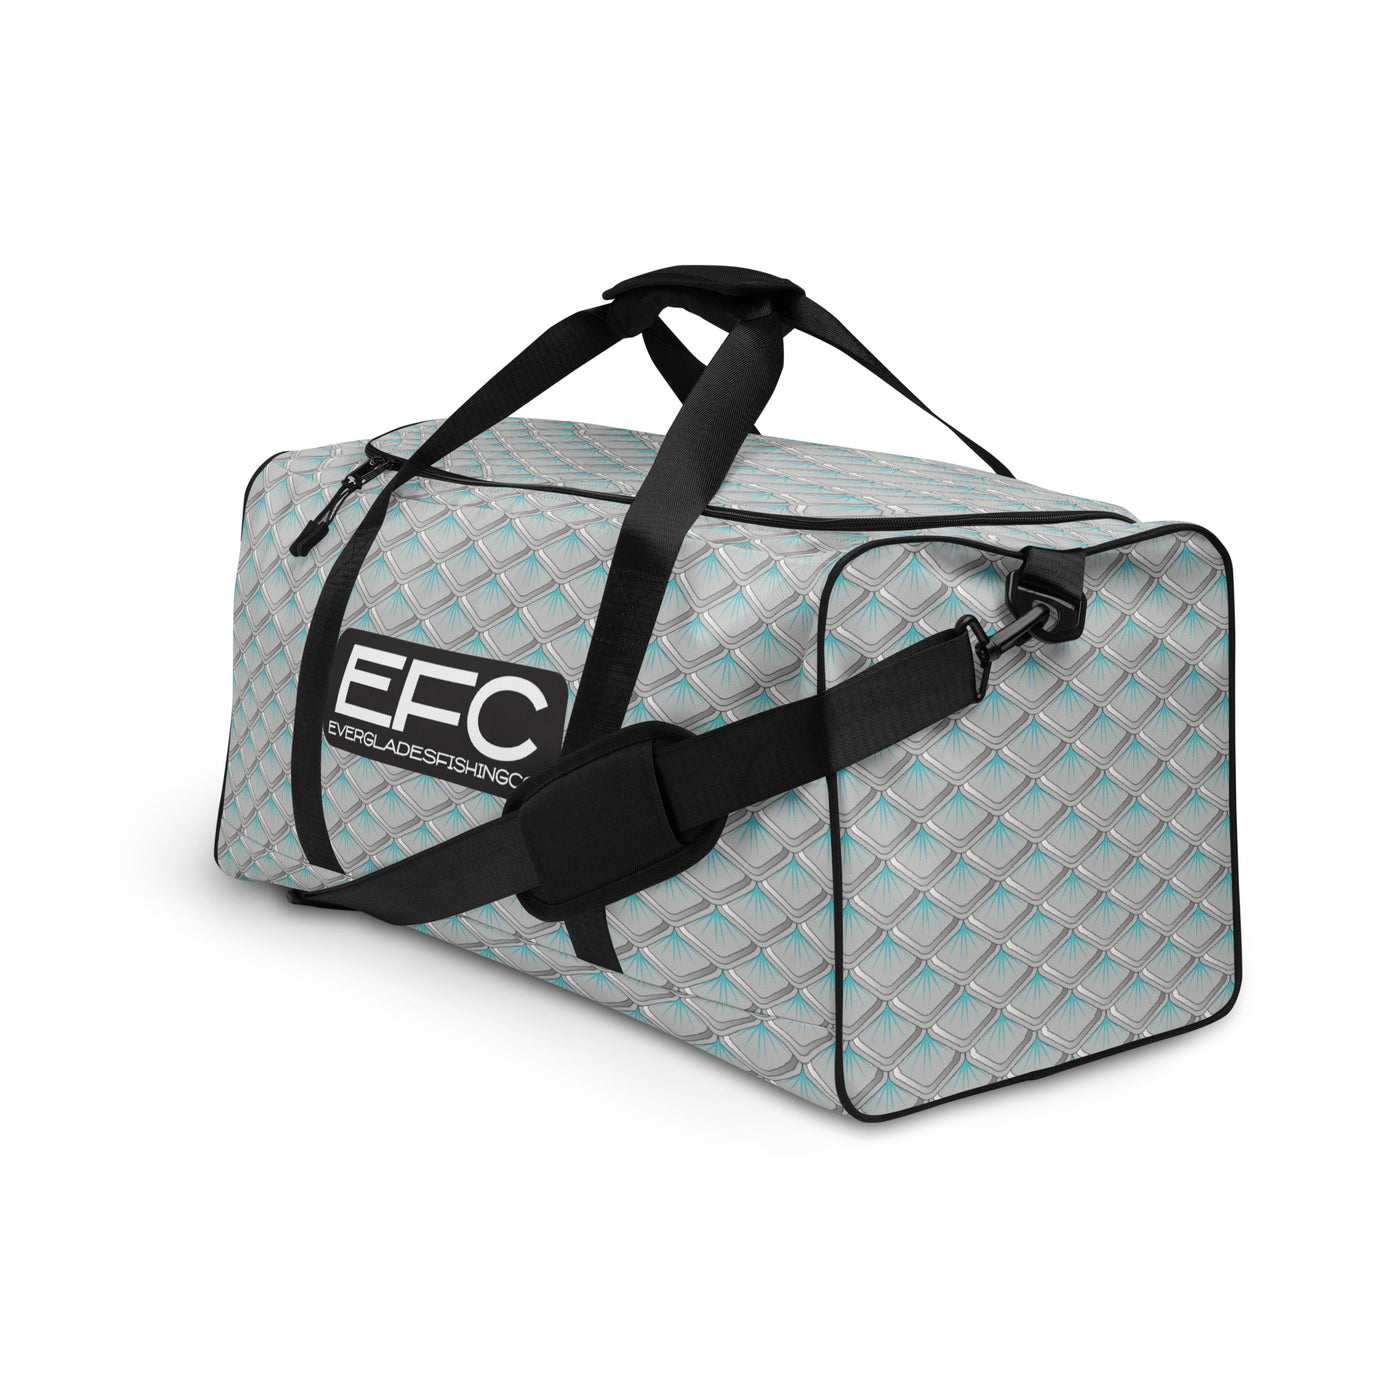 EFC (TARPON SCALES) Duffle bag